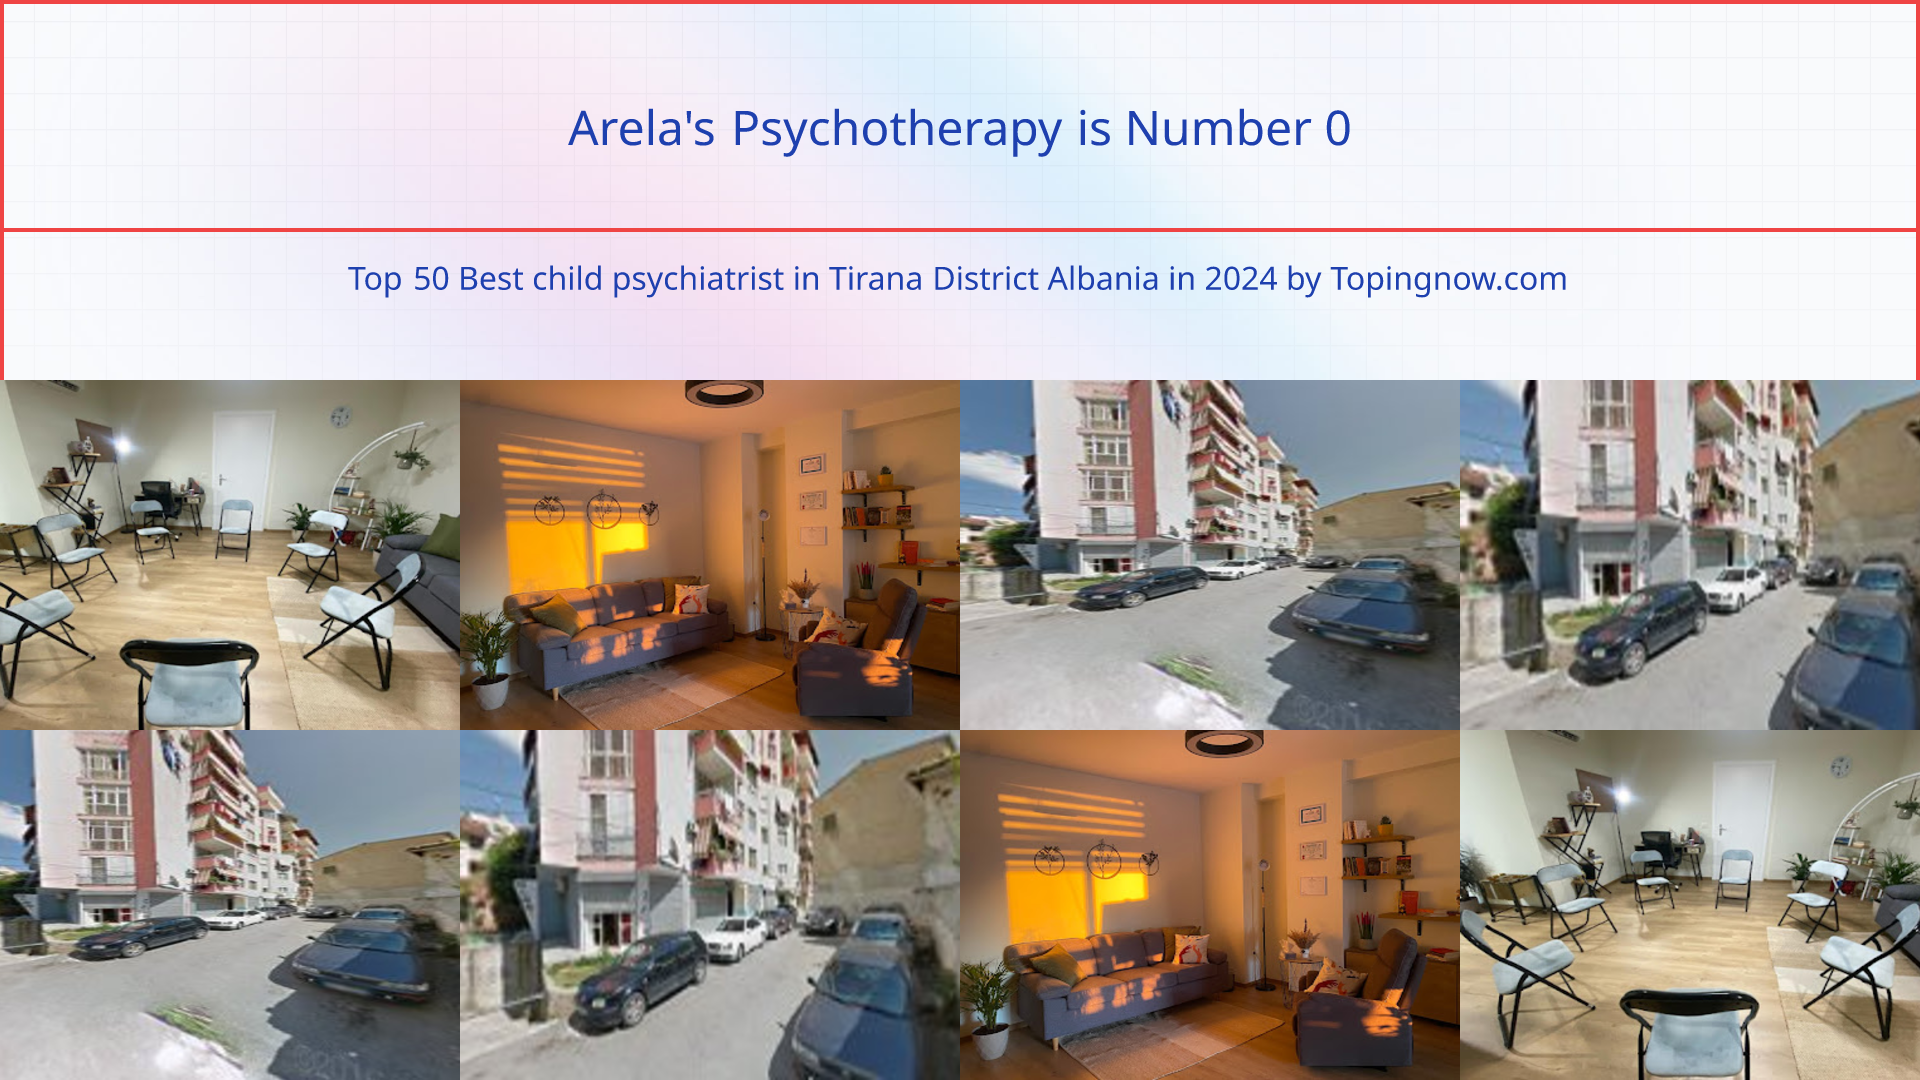 Arela's Psychotherapy: Top 50 Best child psychiatrist in Tirana District Albania in 2024